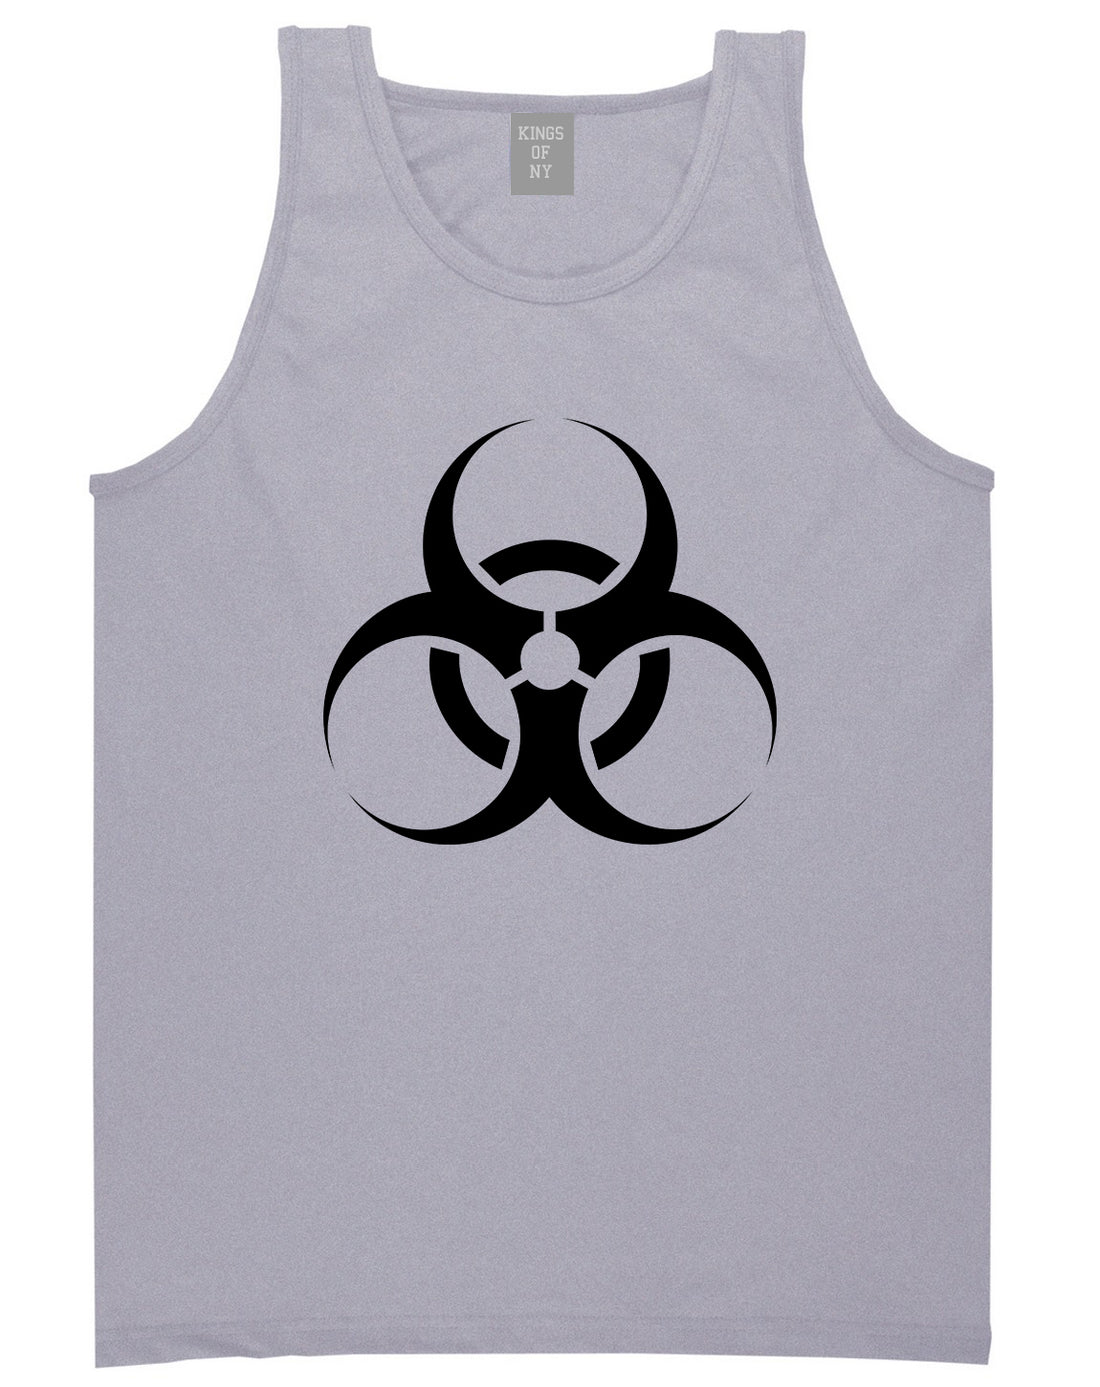 Biohazard Symbol Grey Tank Top Shirt by Kings Of NY